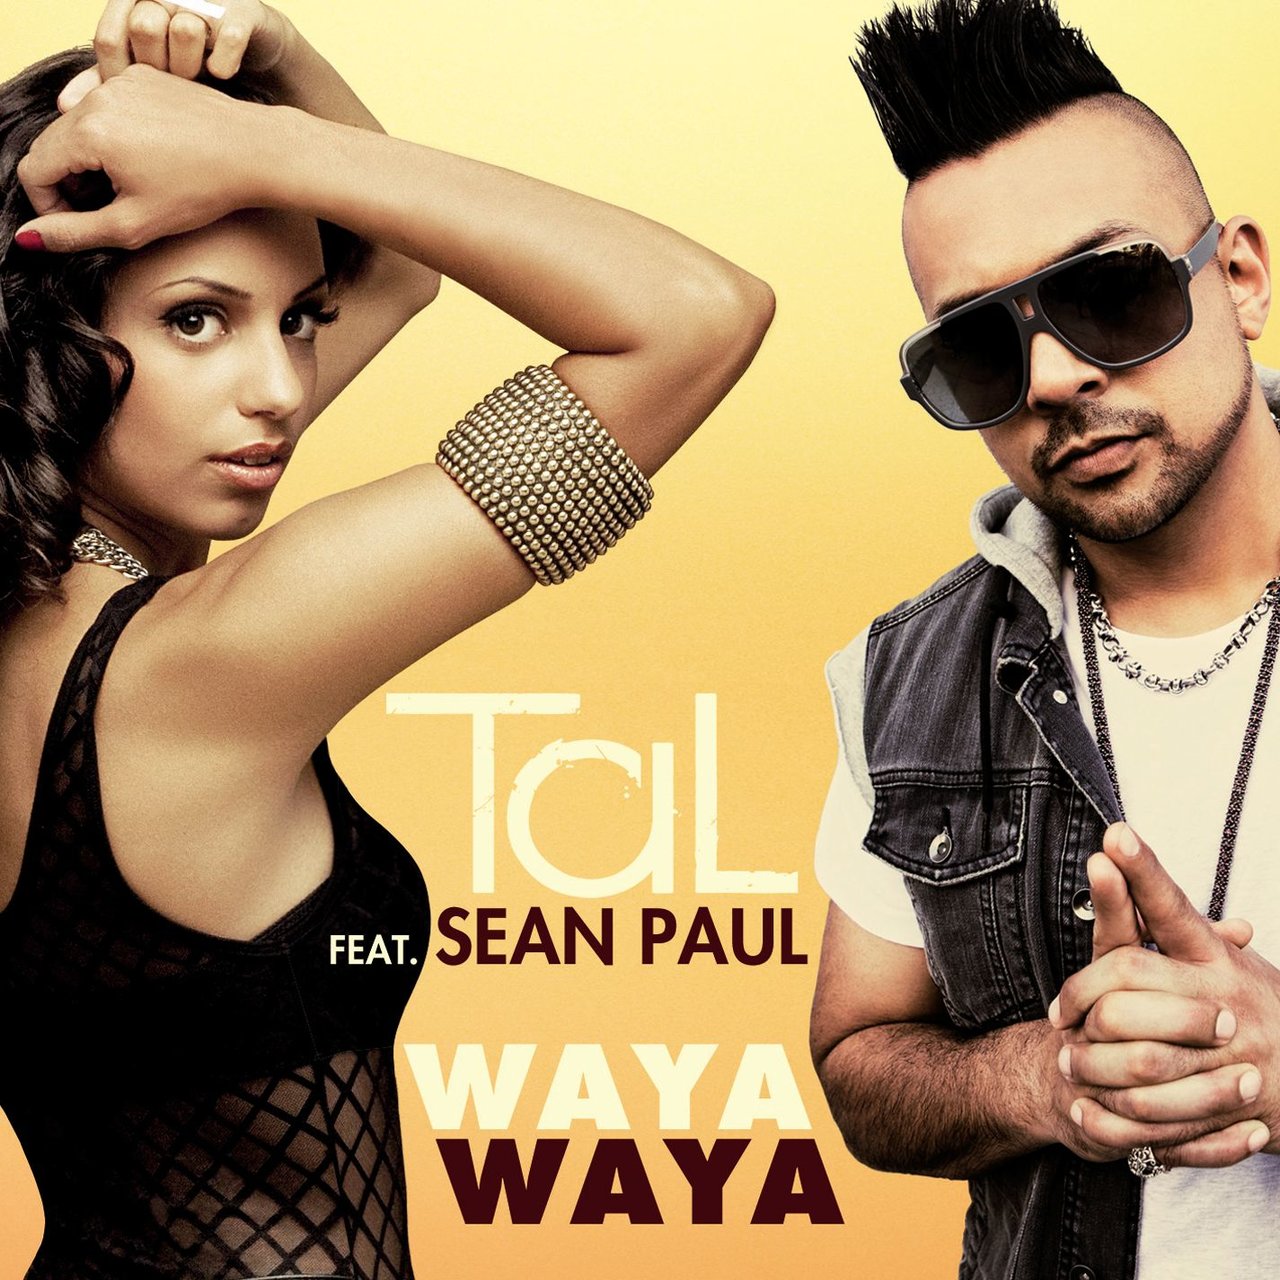 TAL featuring Sean Paul — Waya Waya cover artwork